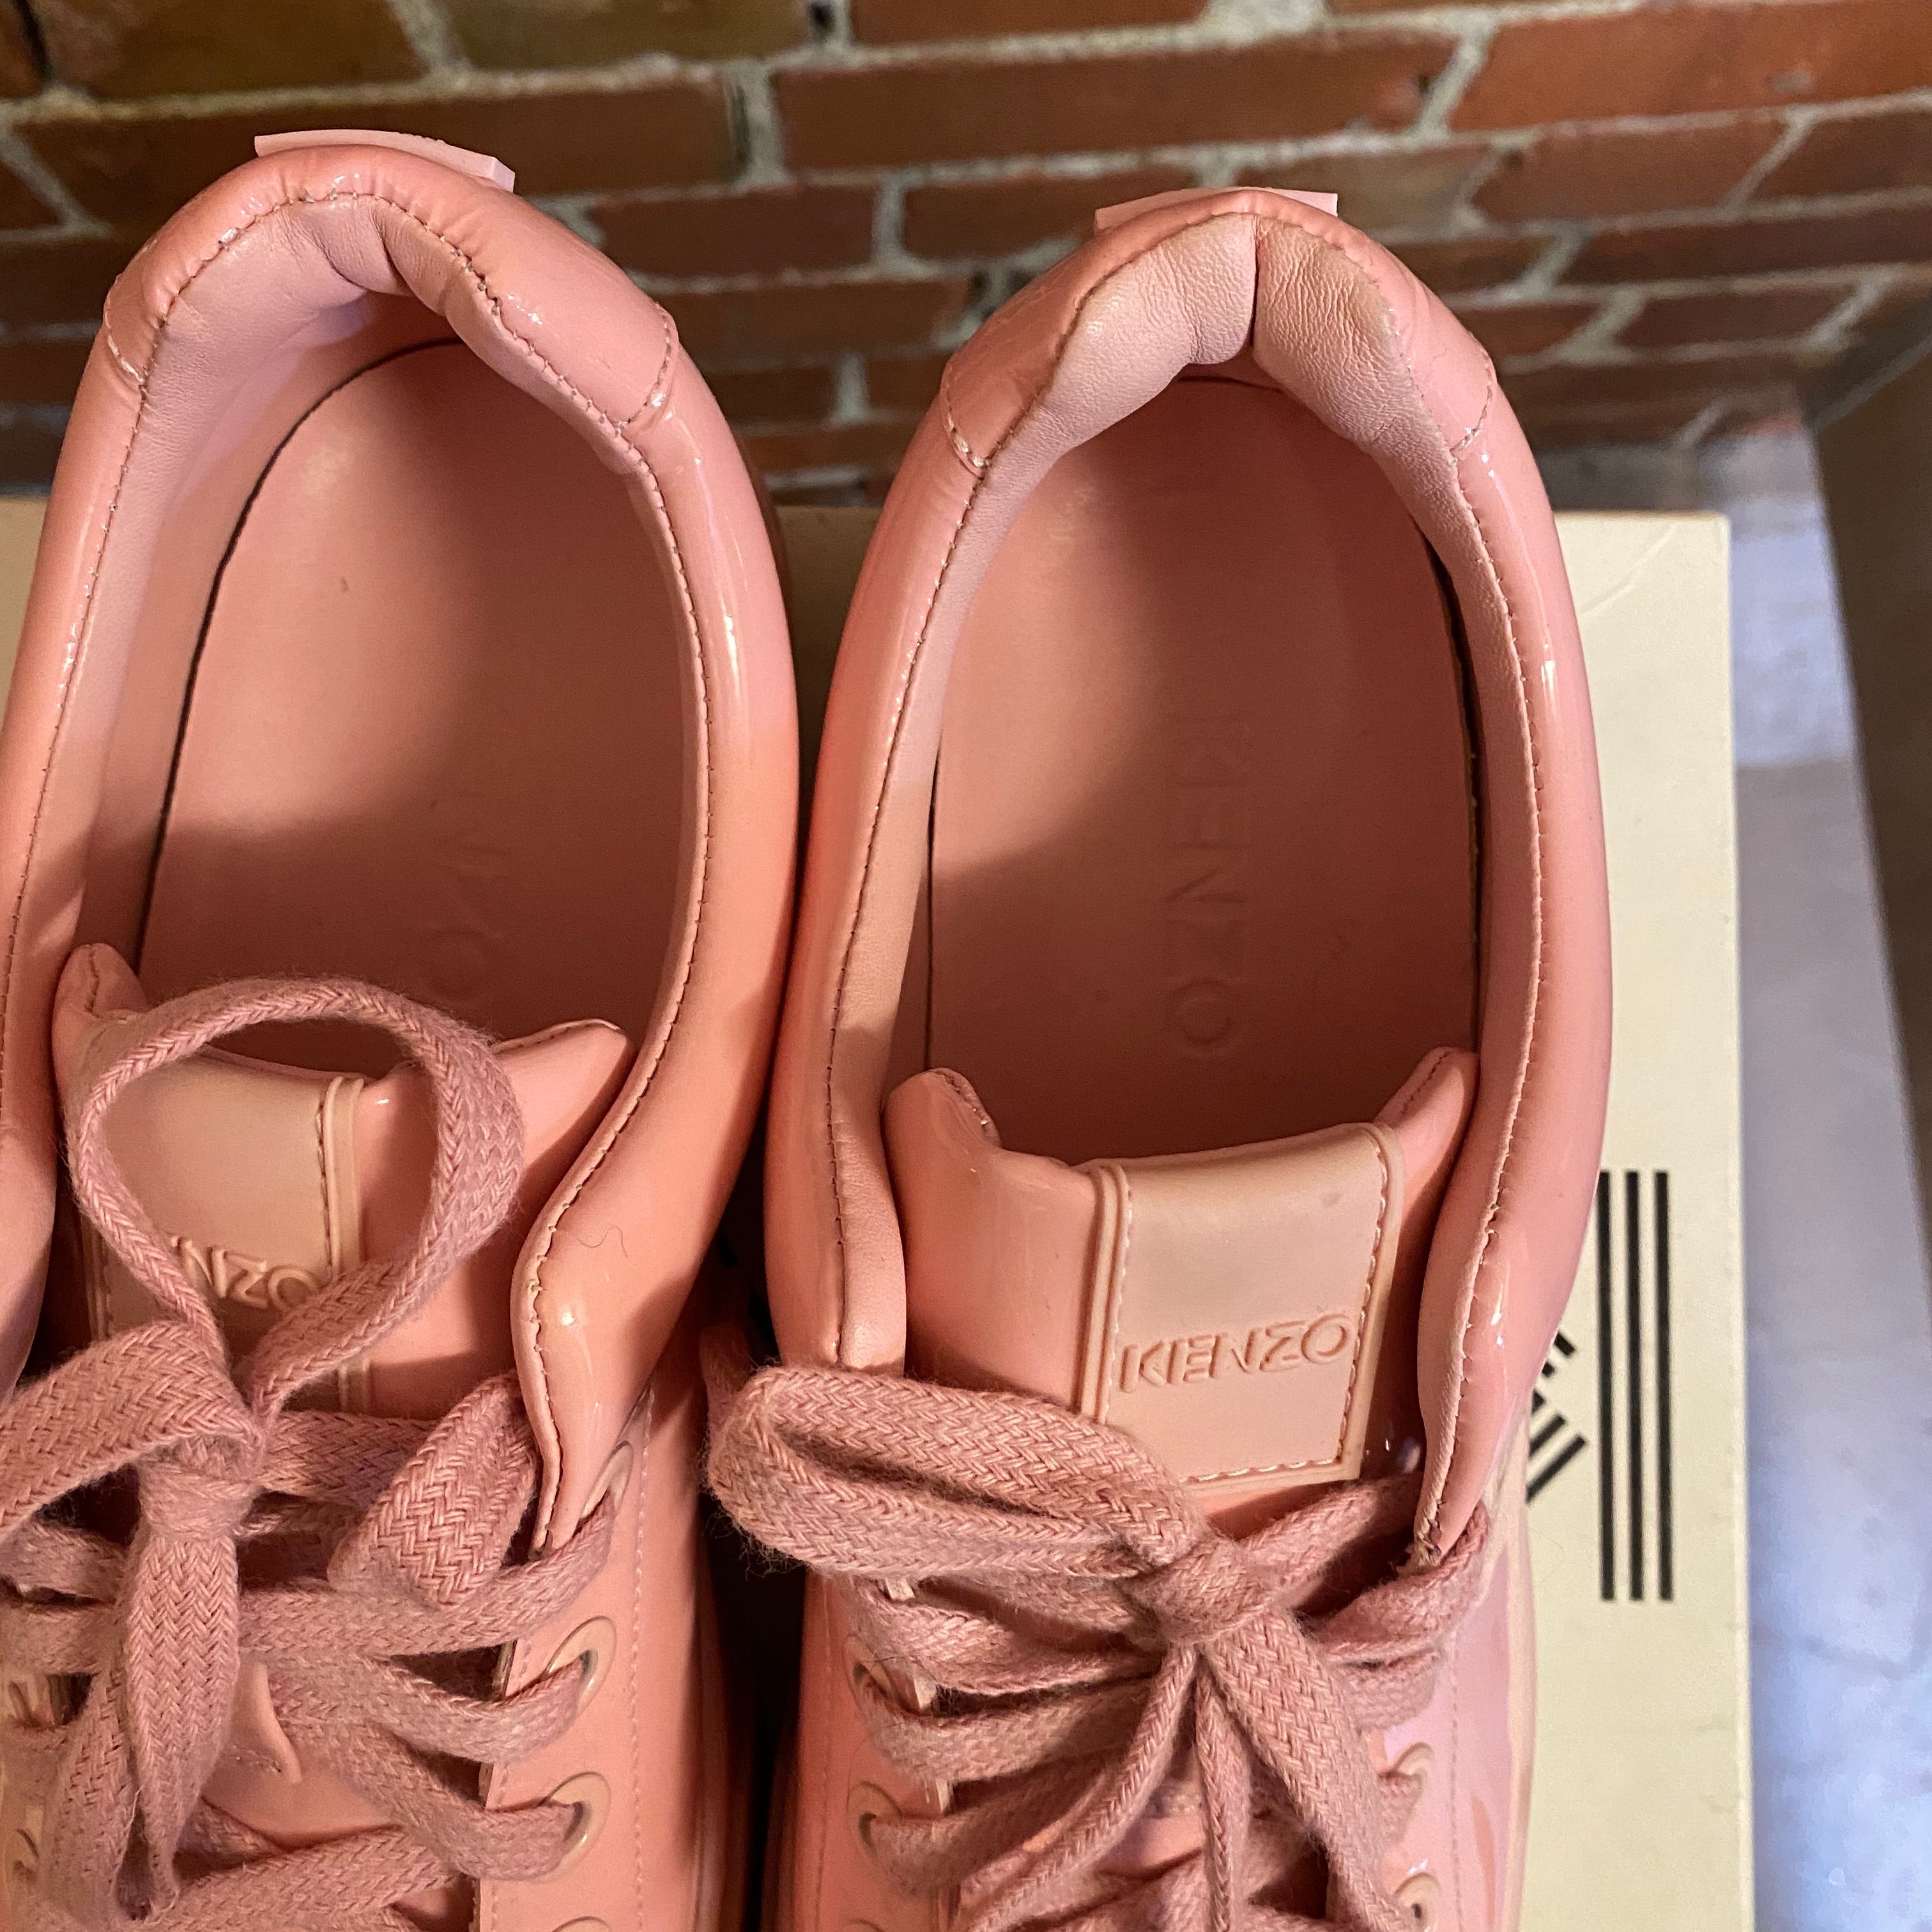 KENZO patent pink sneakers 39